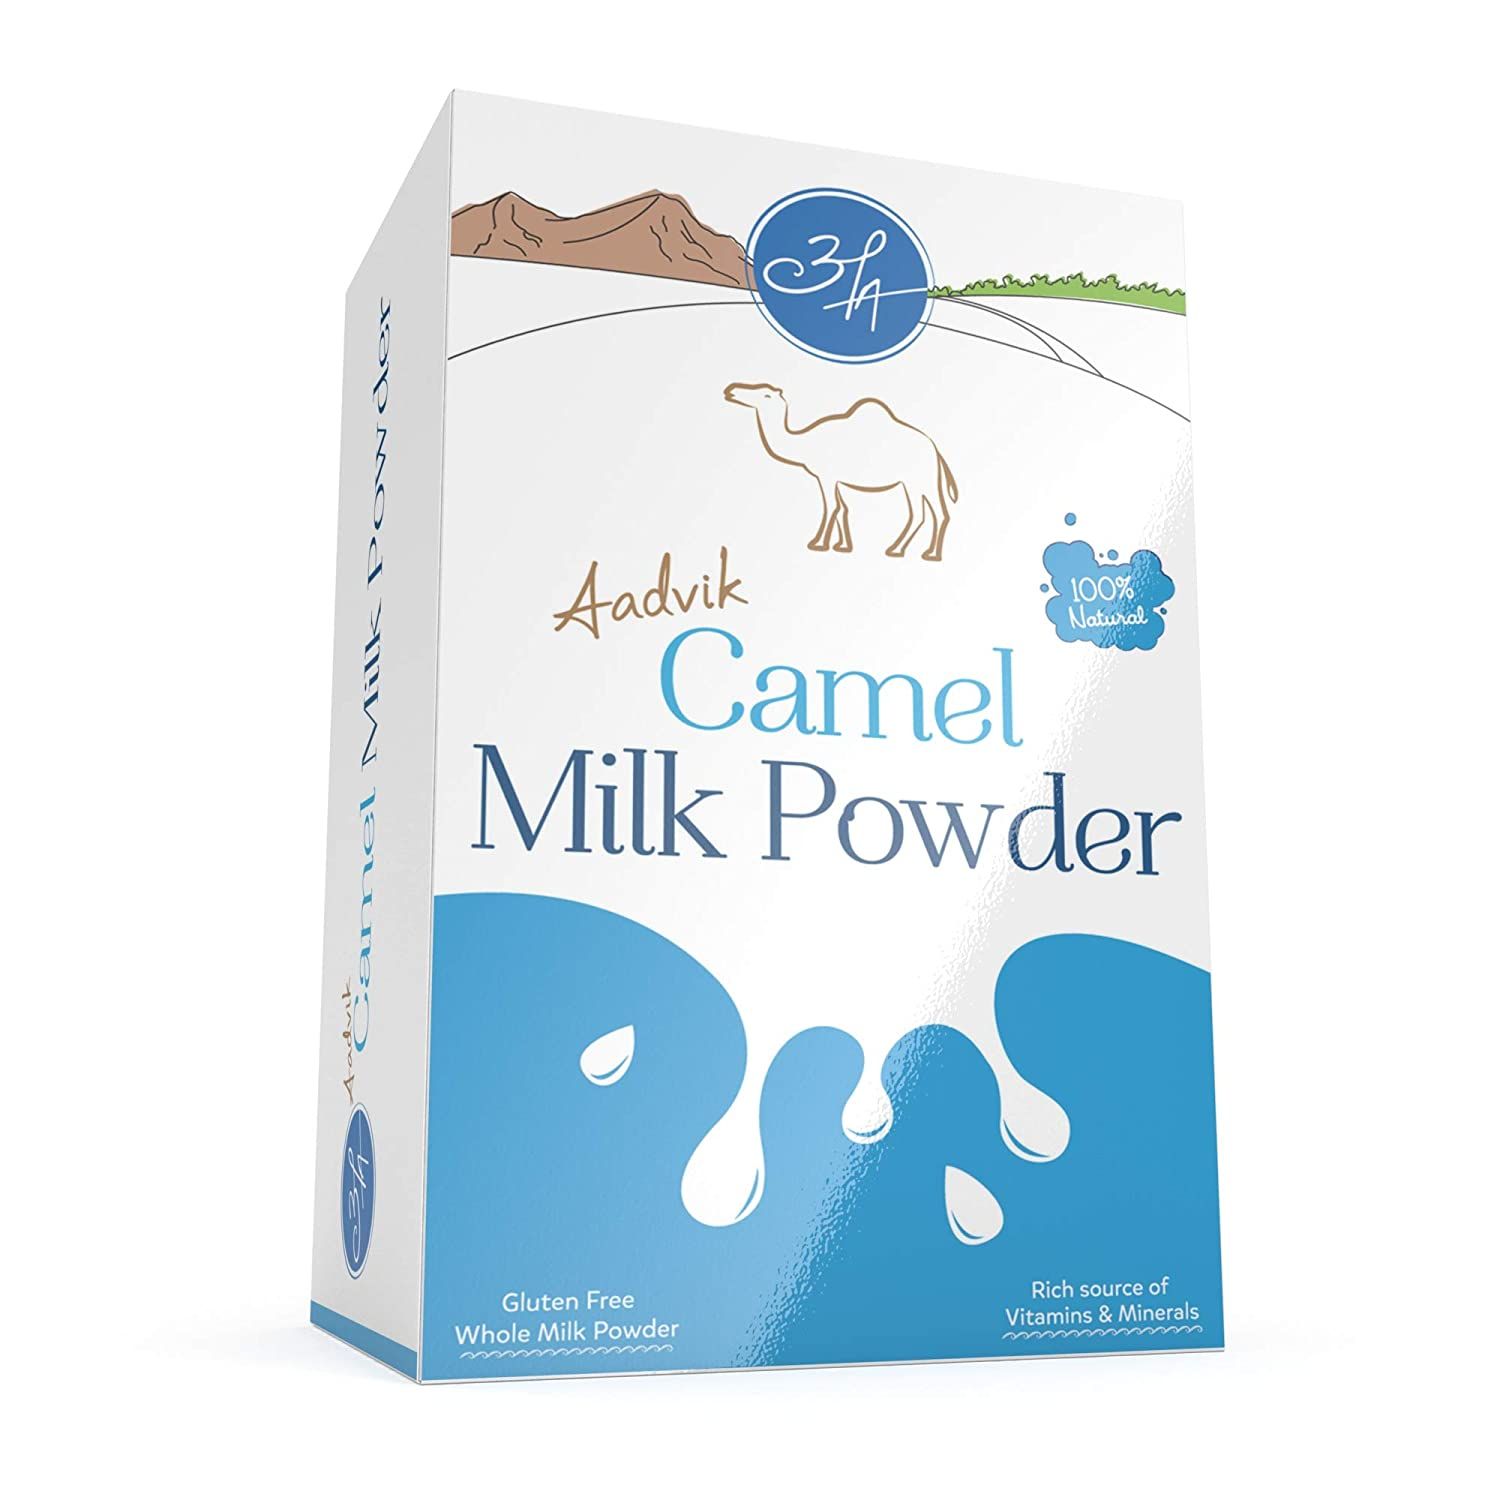 Aadvik Camel Milk Powder Image